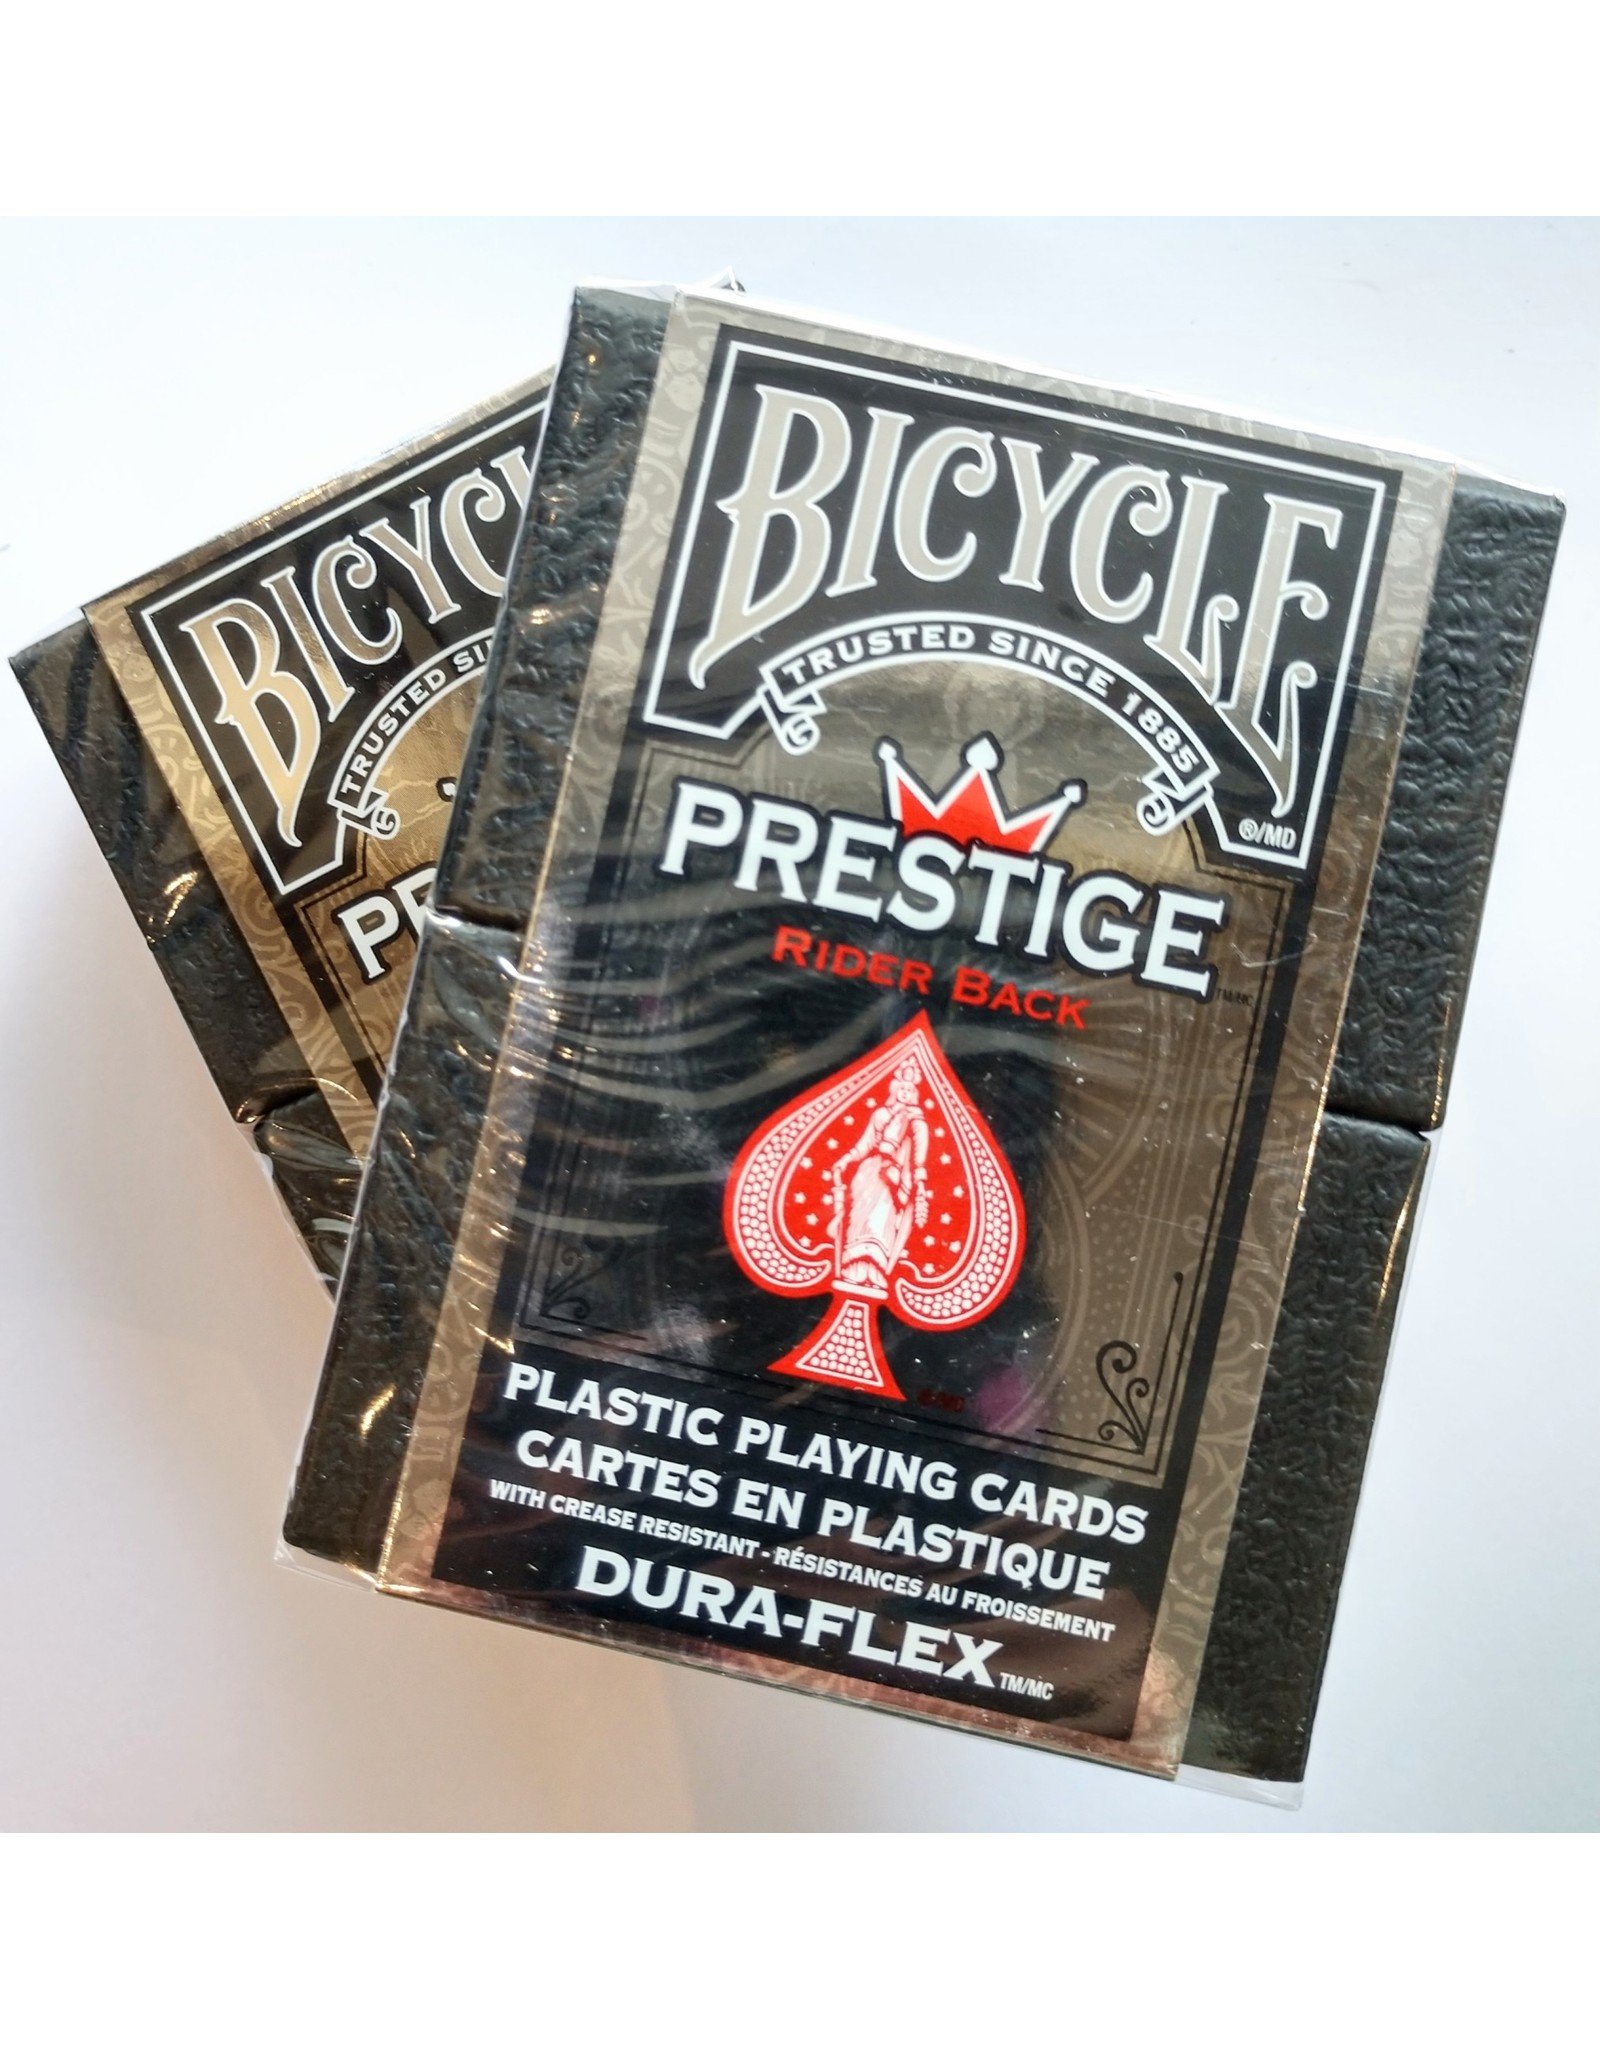 bicycle prestige rider back